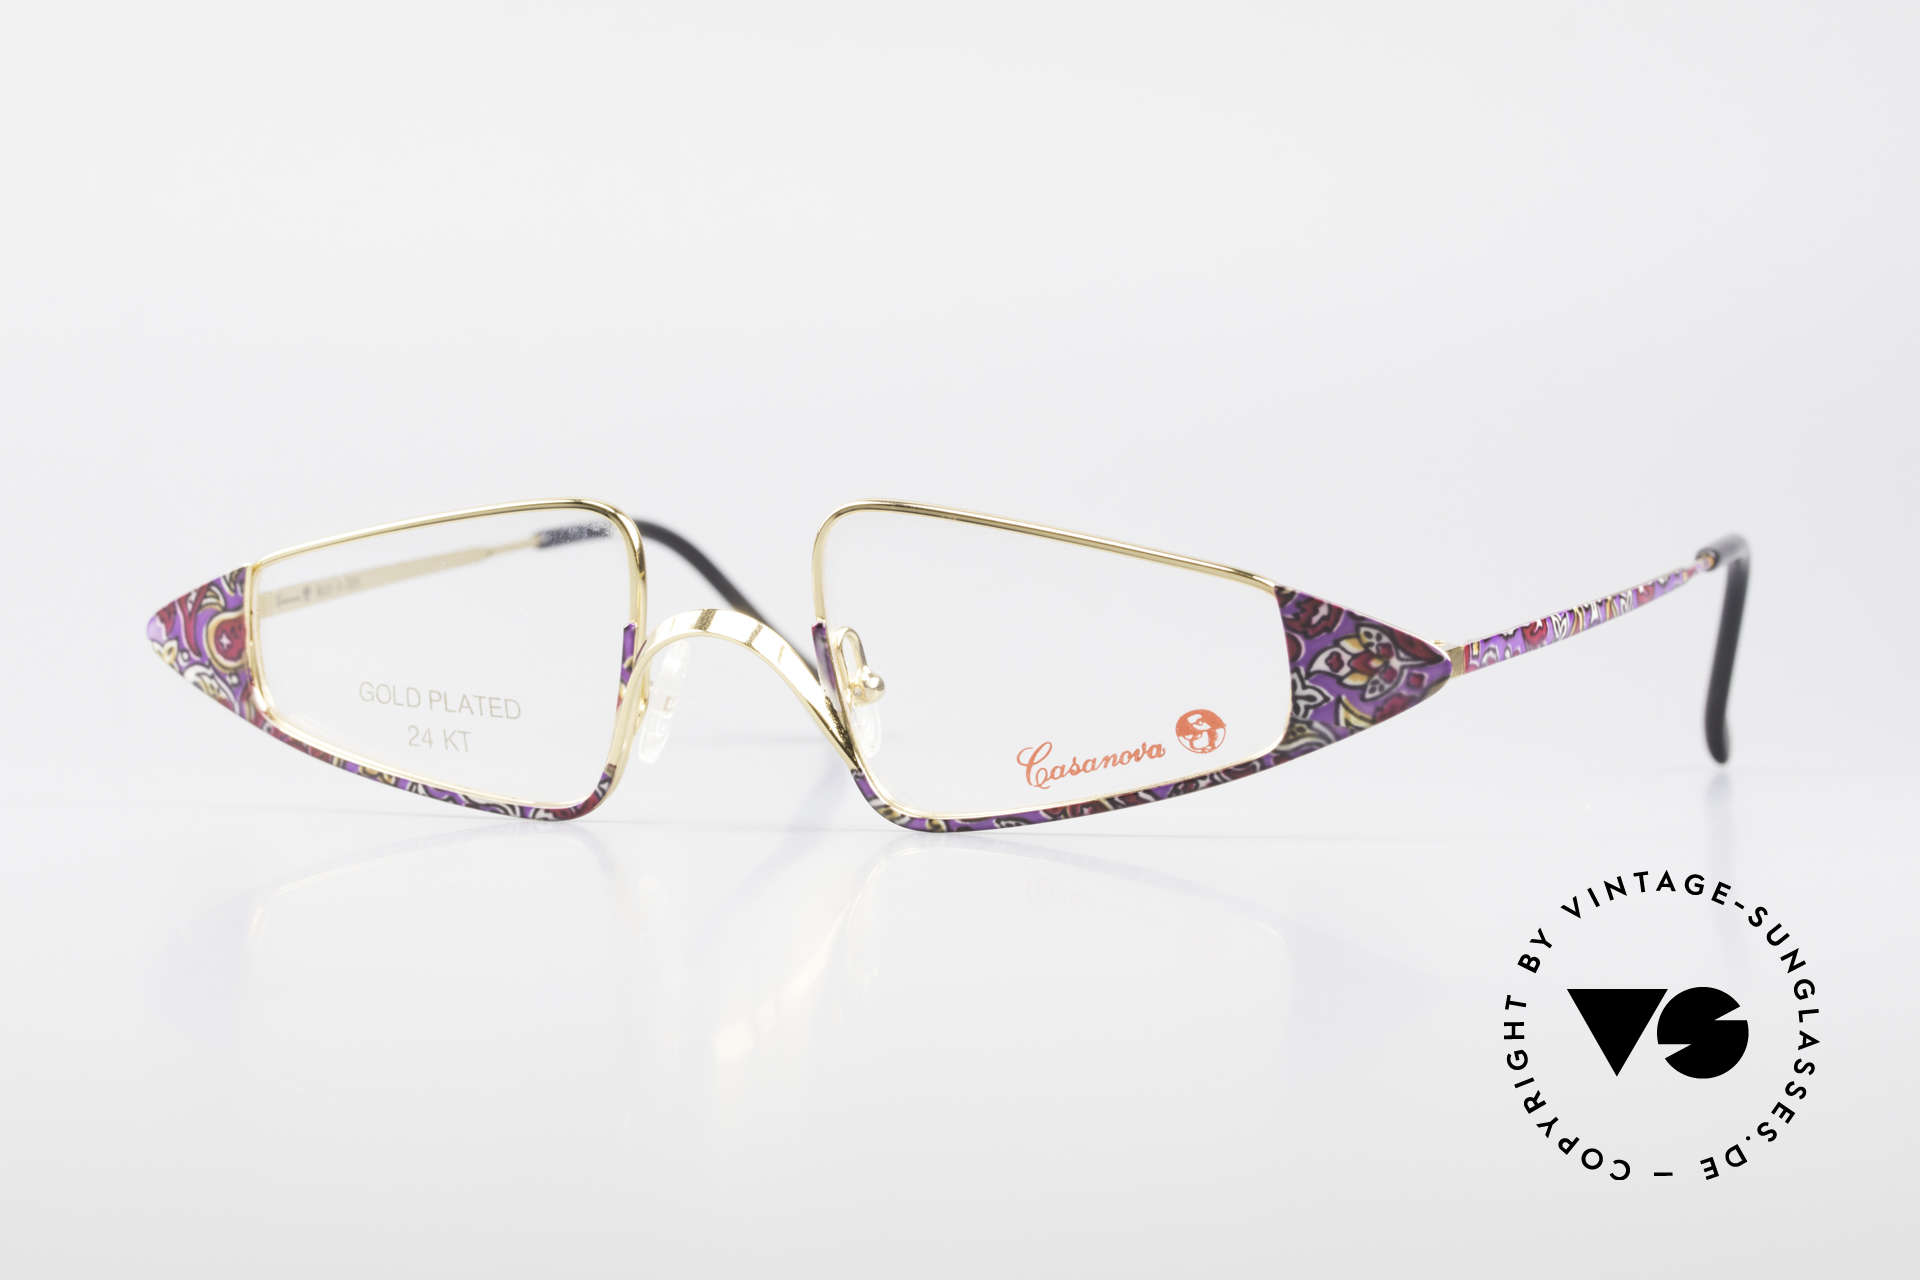 Casanova FC15 24kt Gold Plated Reading Specs, glamorous Casanova eyeglass-frame from around 1985, Made for Women